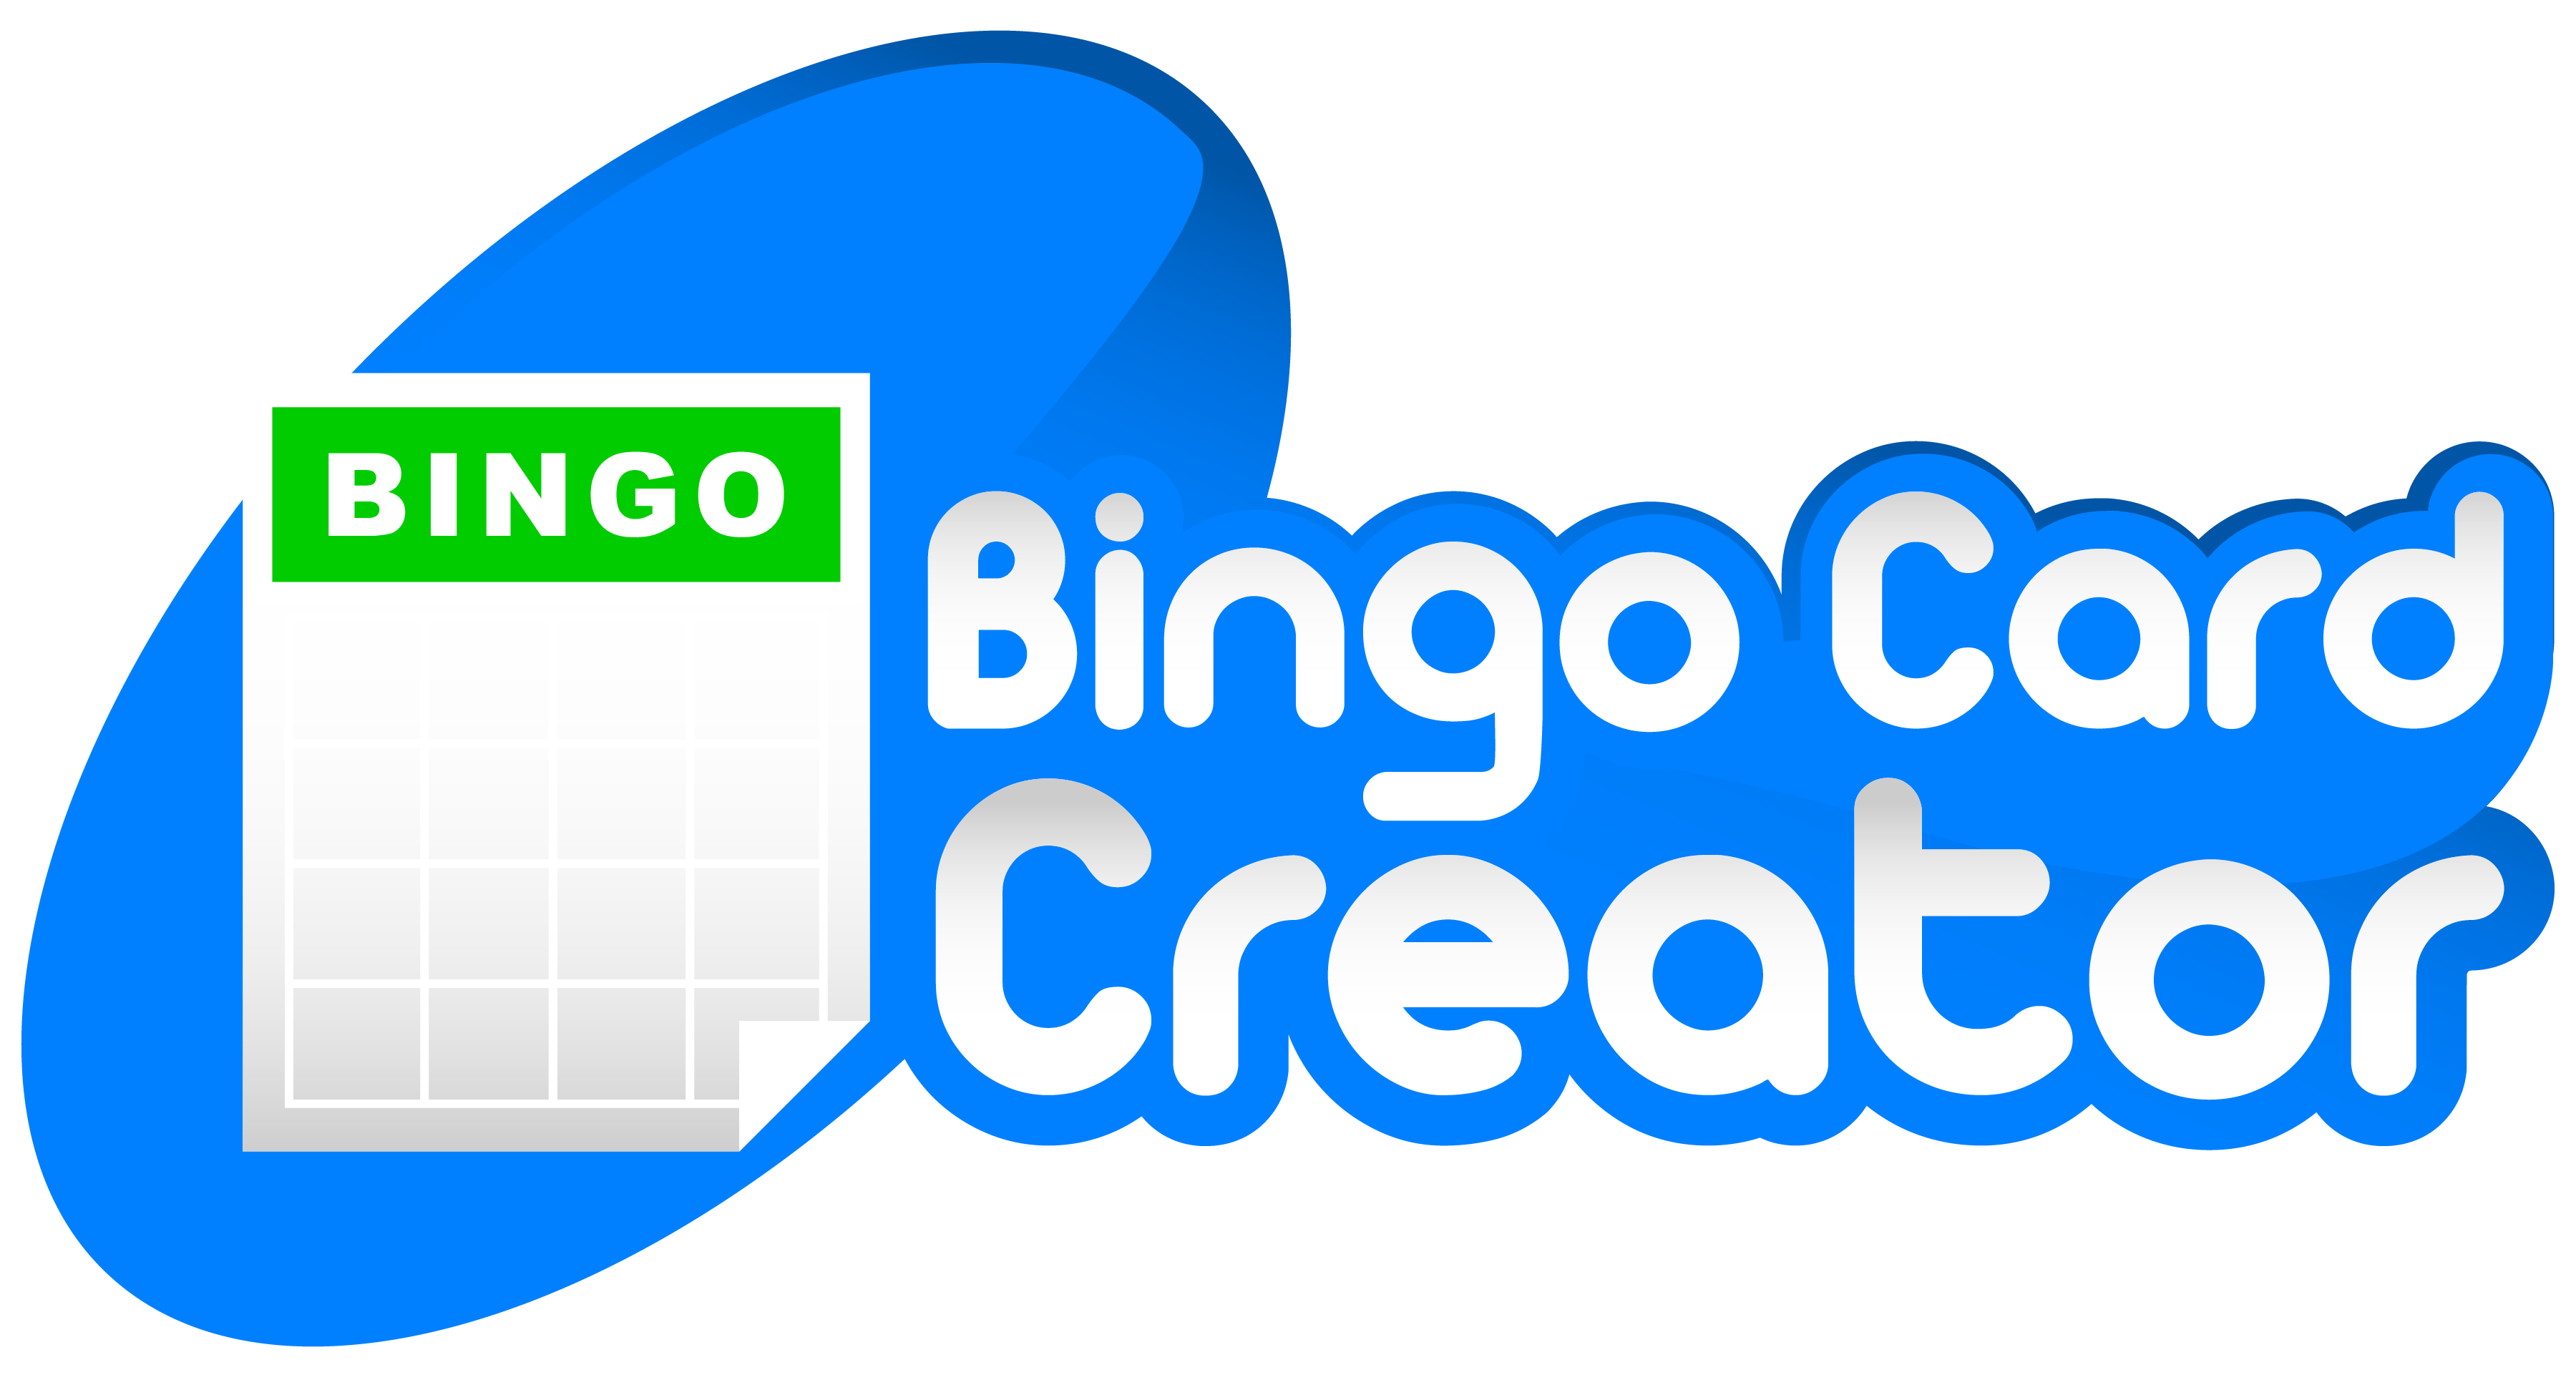 customizable-bingo-template-5x5-all-are-here